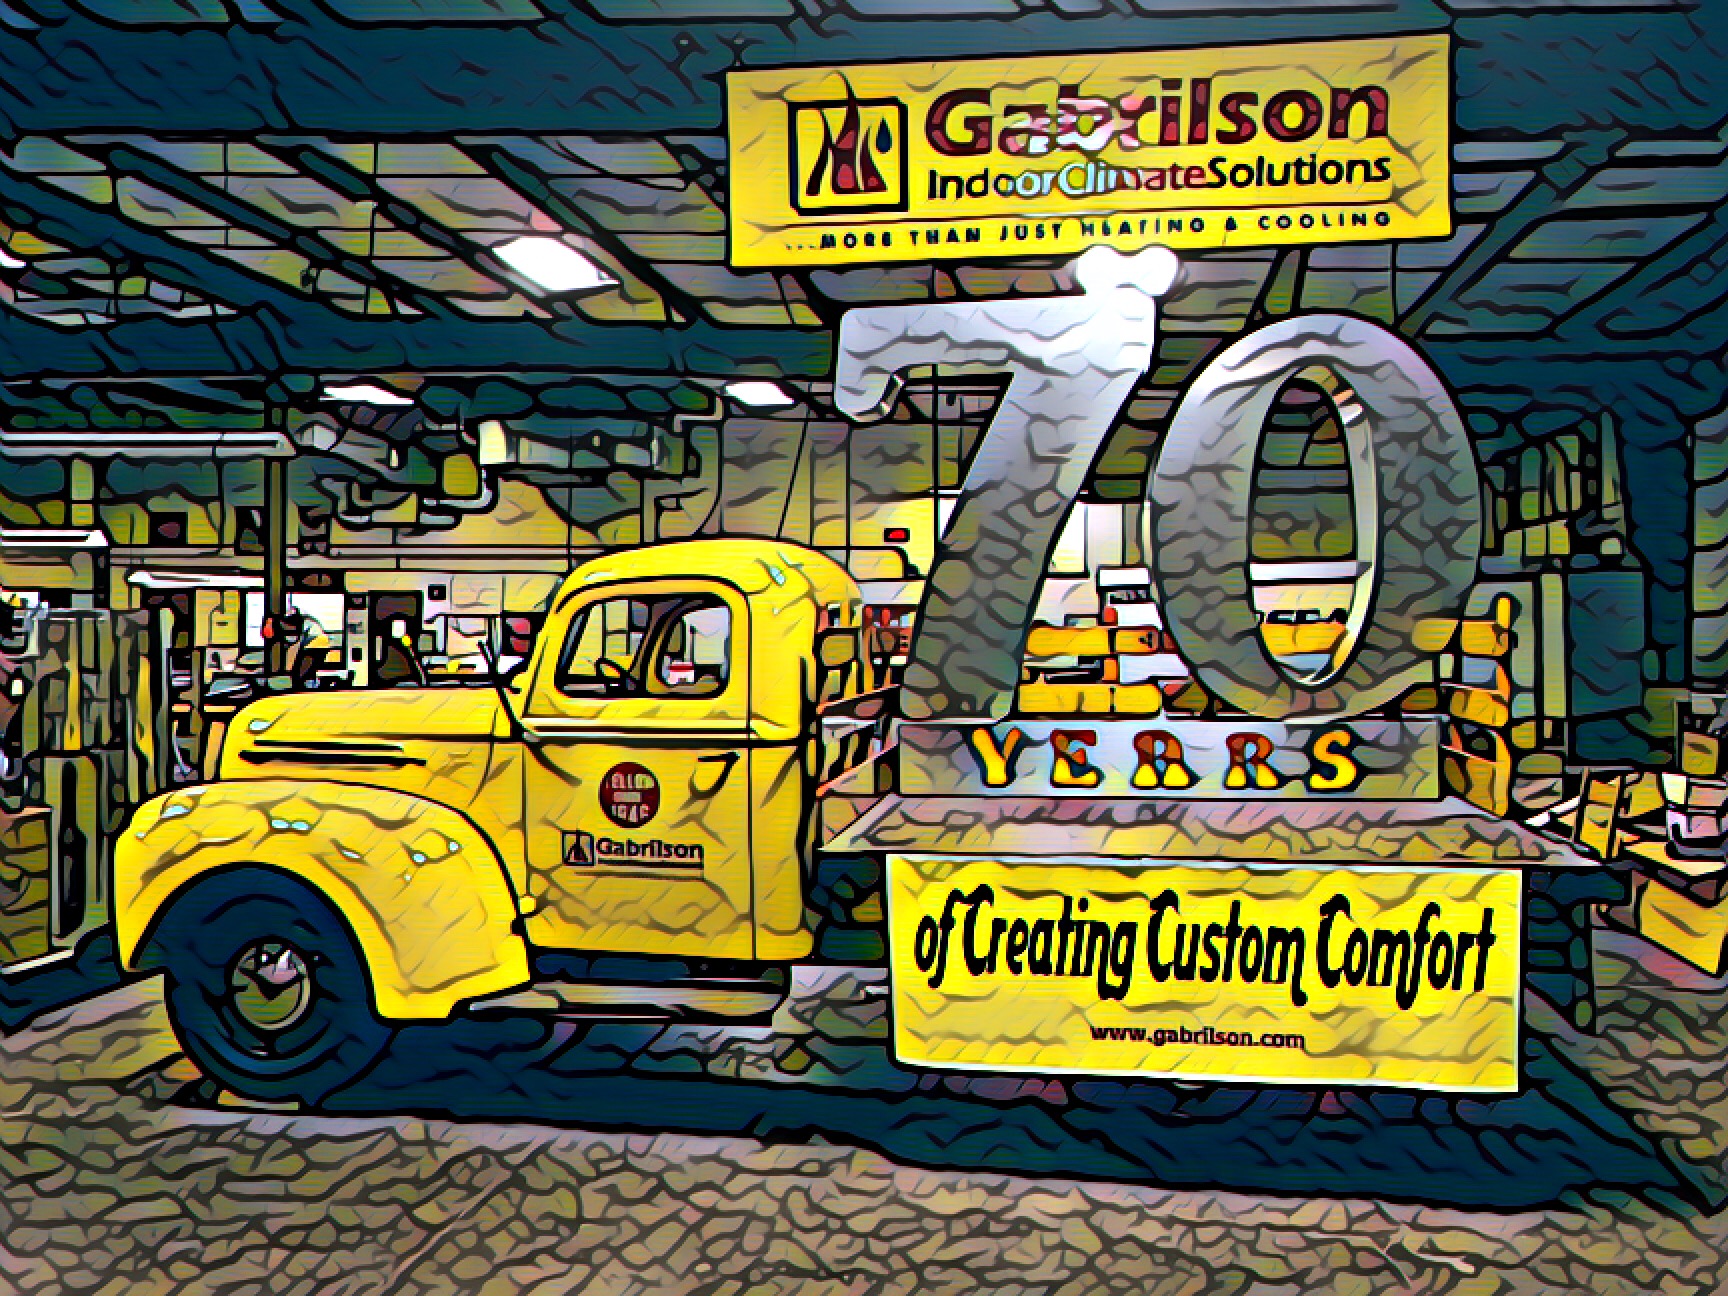 Gabrilson truck 3 533x400